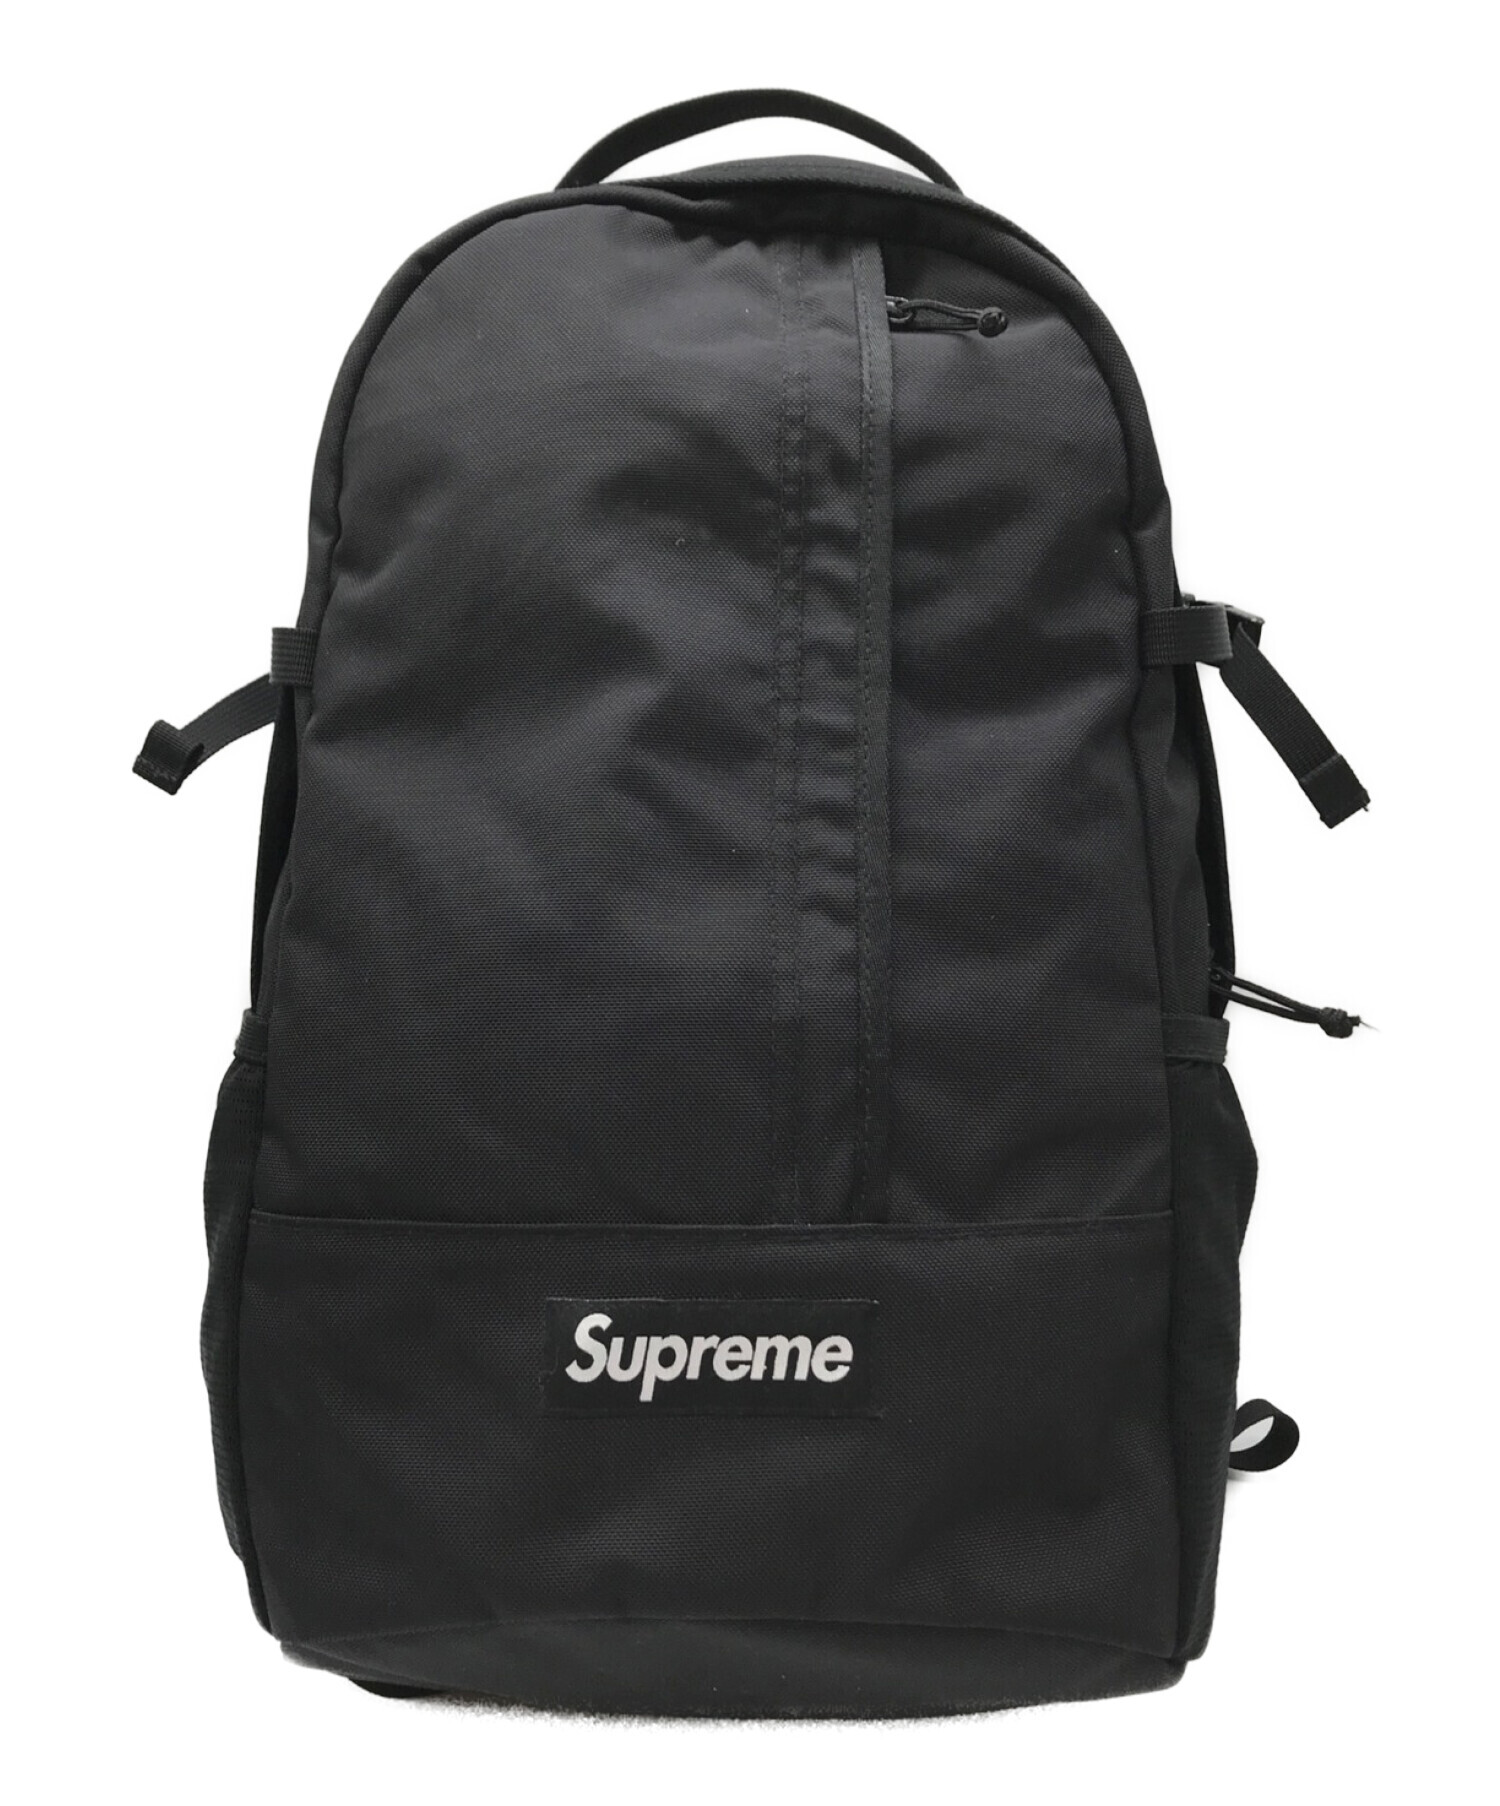 Supreme 18SS Back Pack 黒 バッグパック 国内正規 新品